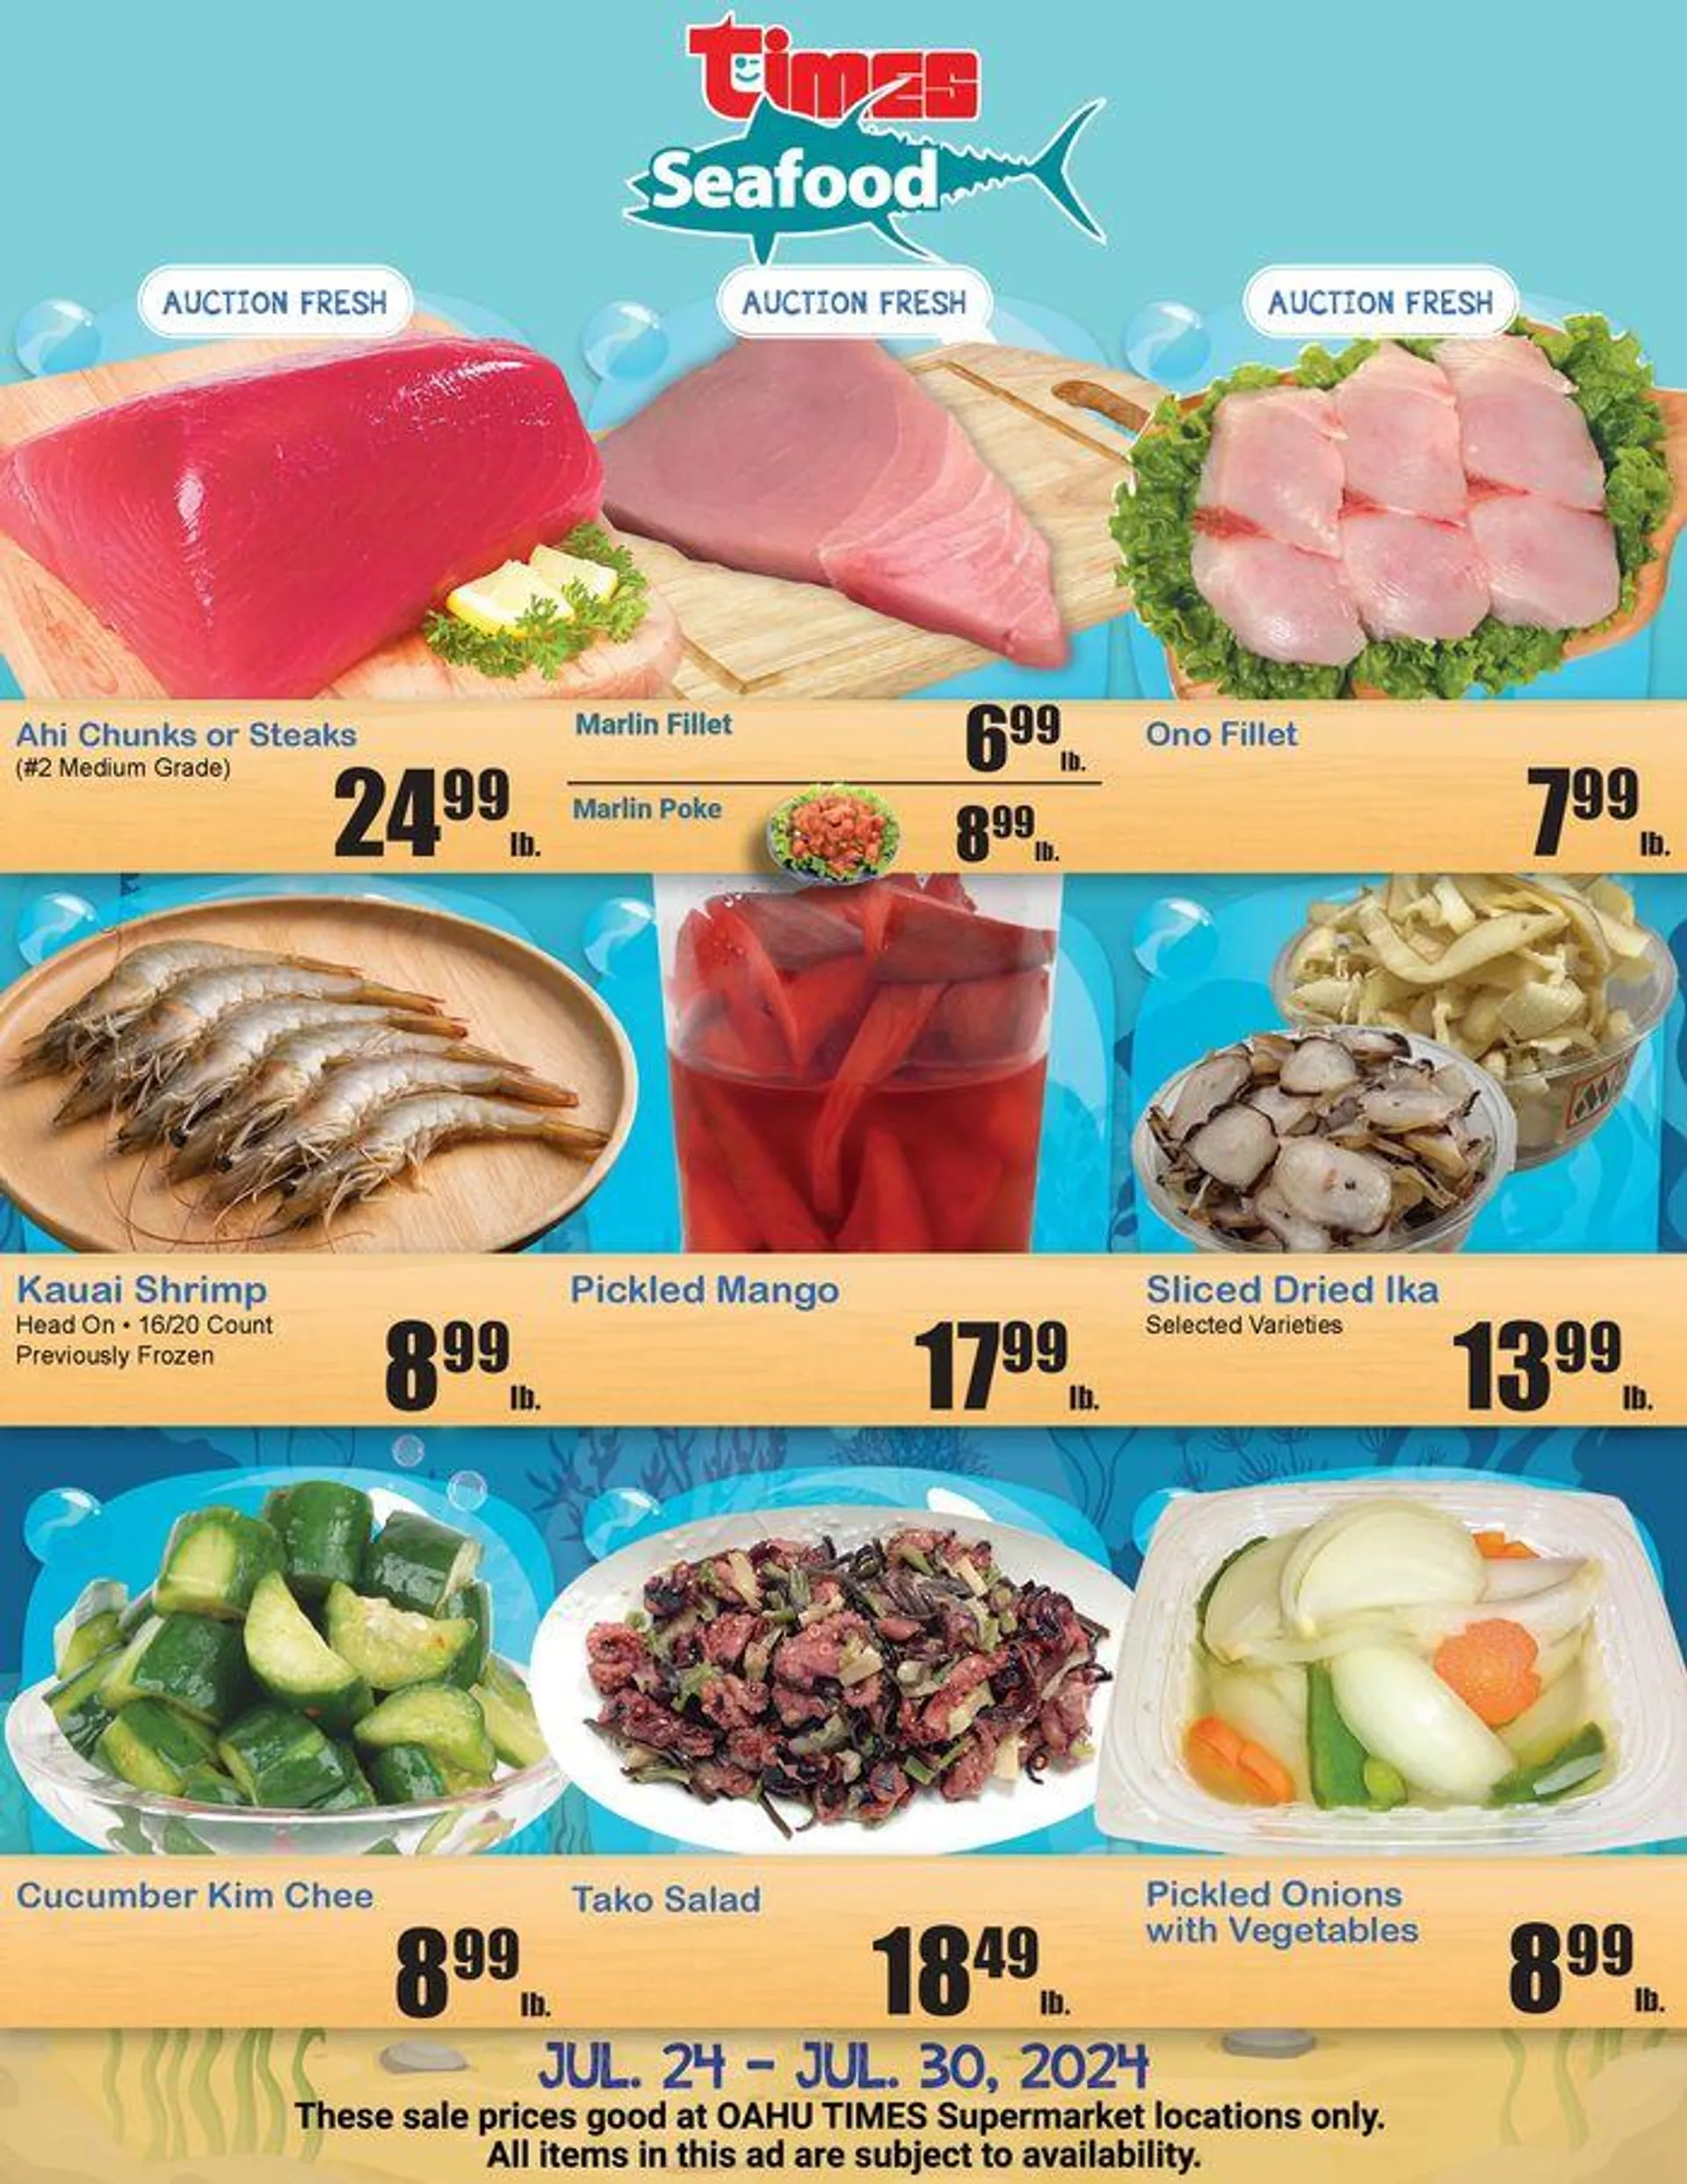 Seafood Specials - 1